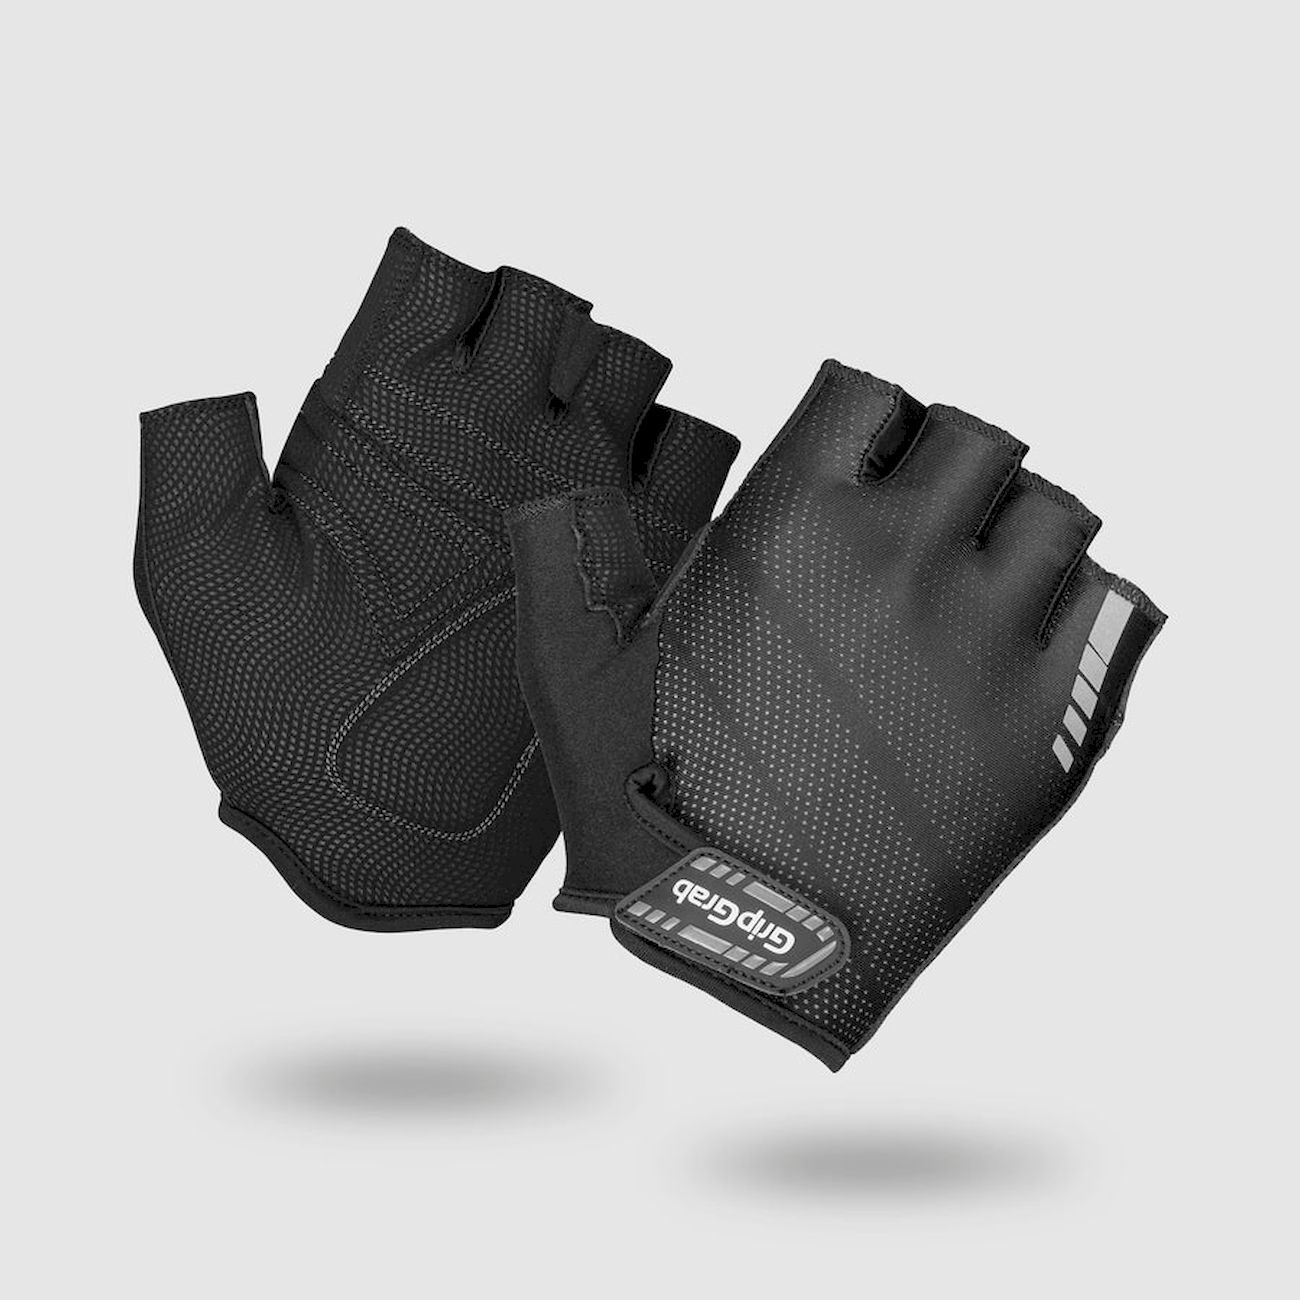 Grip Grab Rouleur Padded Gloves - Guanti corti ciclismo - Uomo